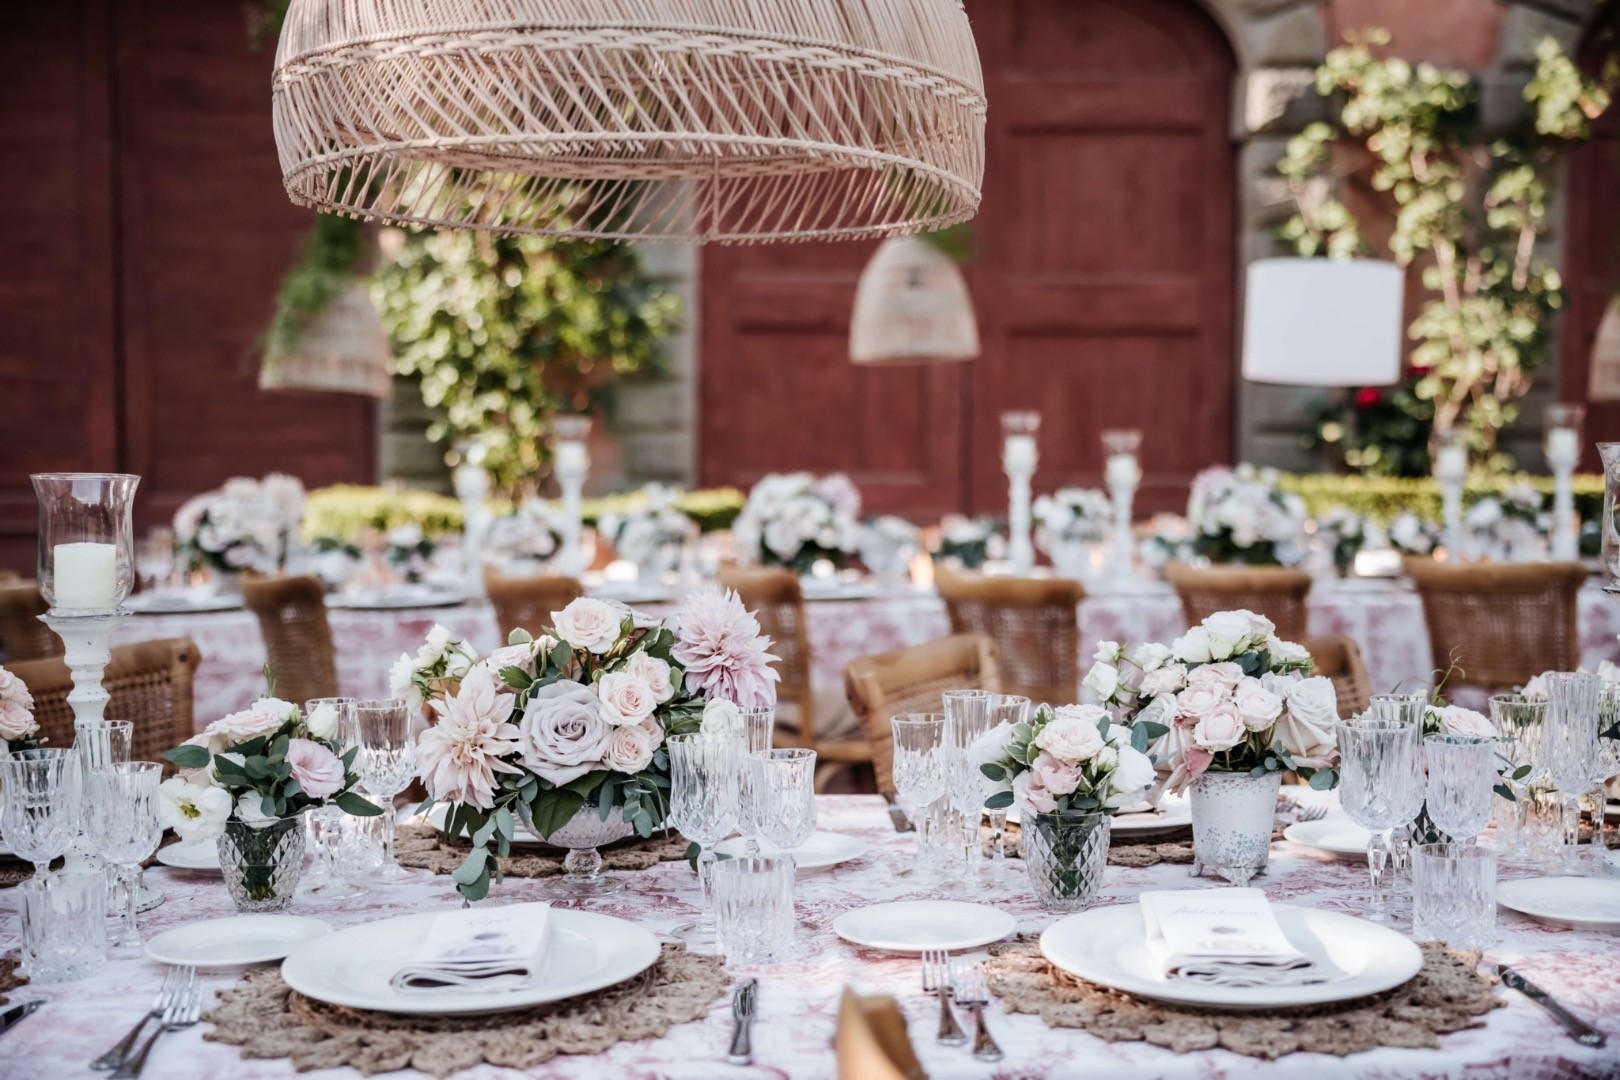 Intimate weddings in Toscana, una scelta di stile